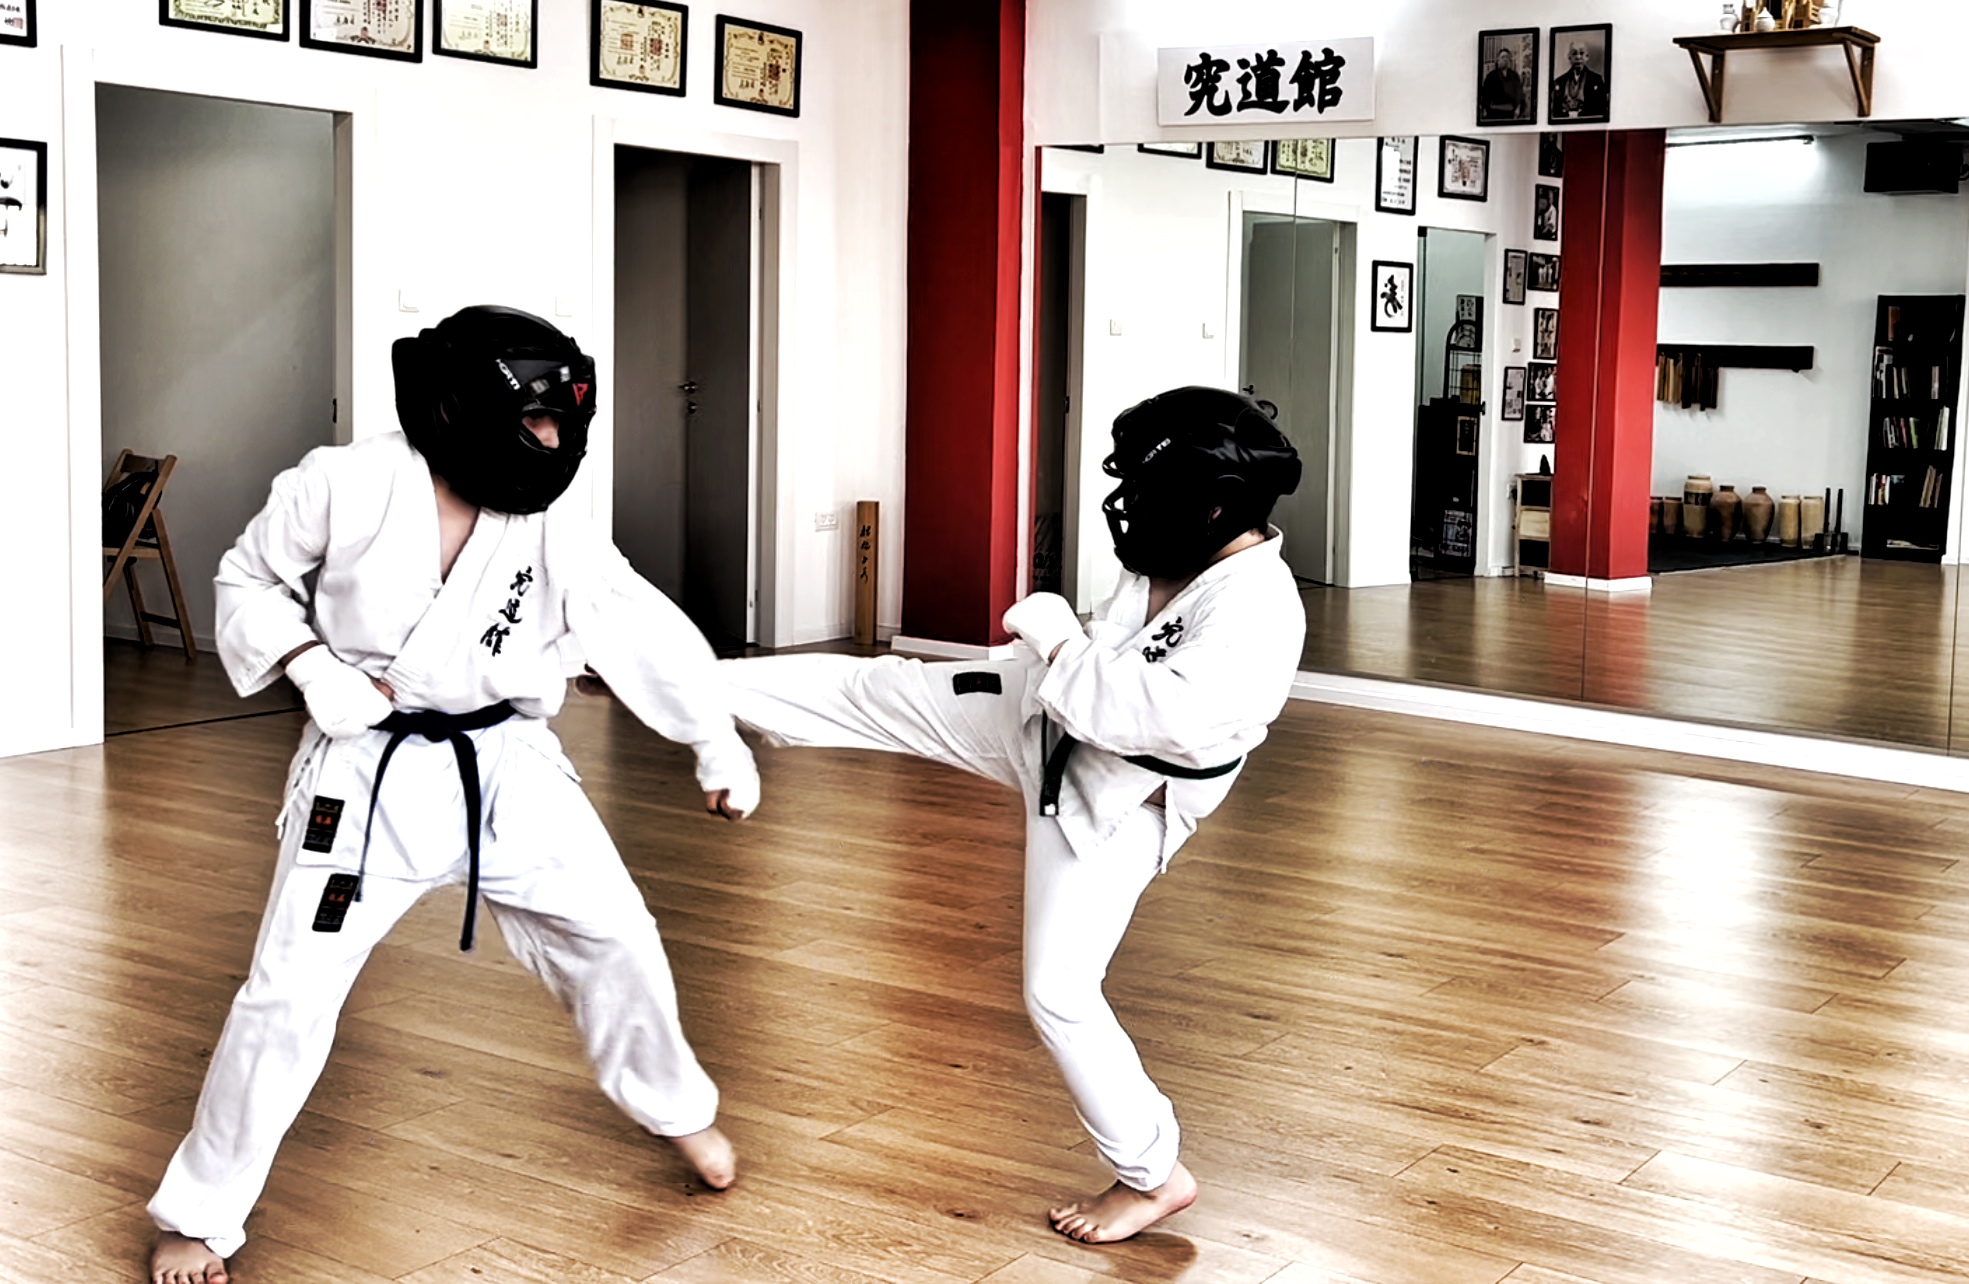 Karate Kids